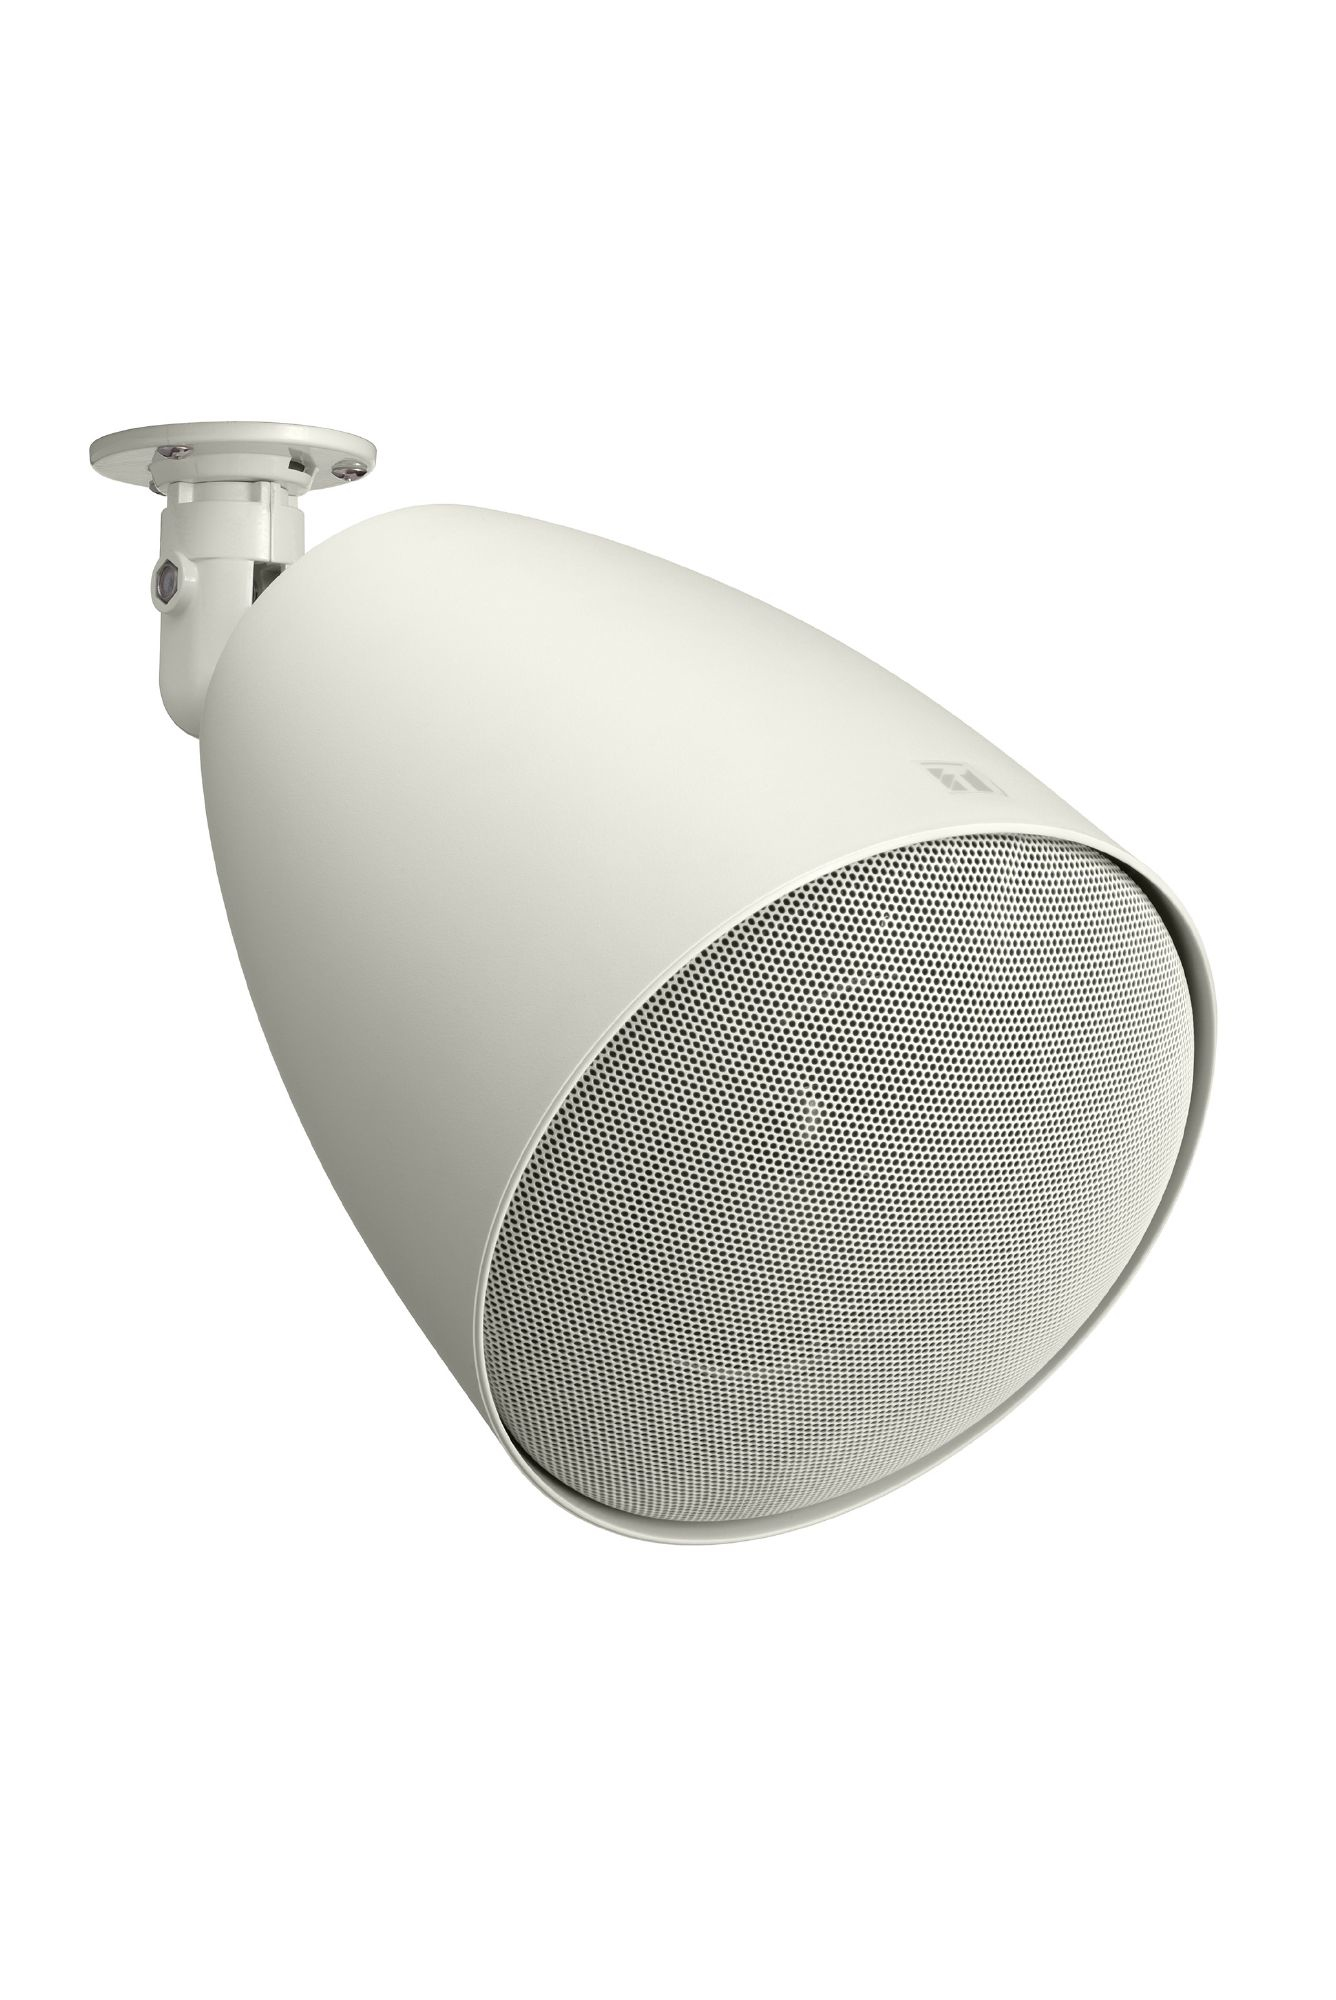 TOA PJ-154BS loudspeaker White Wired 15 W